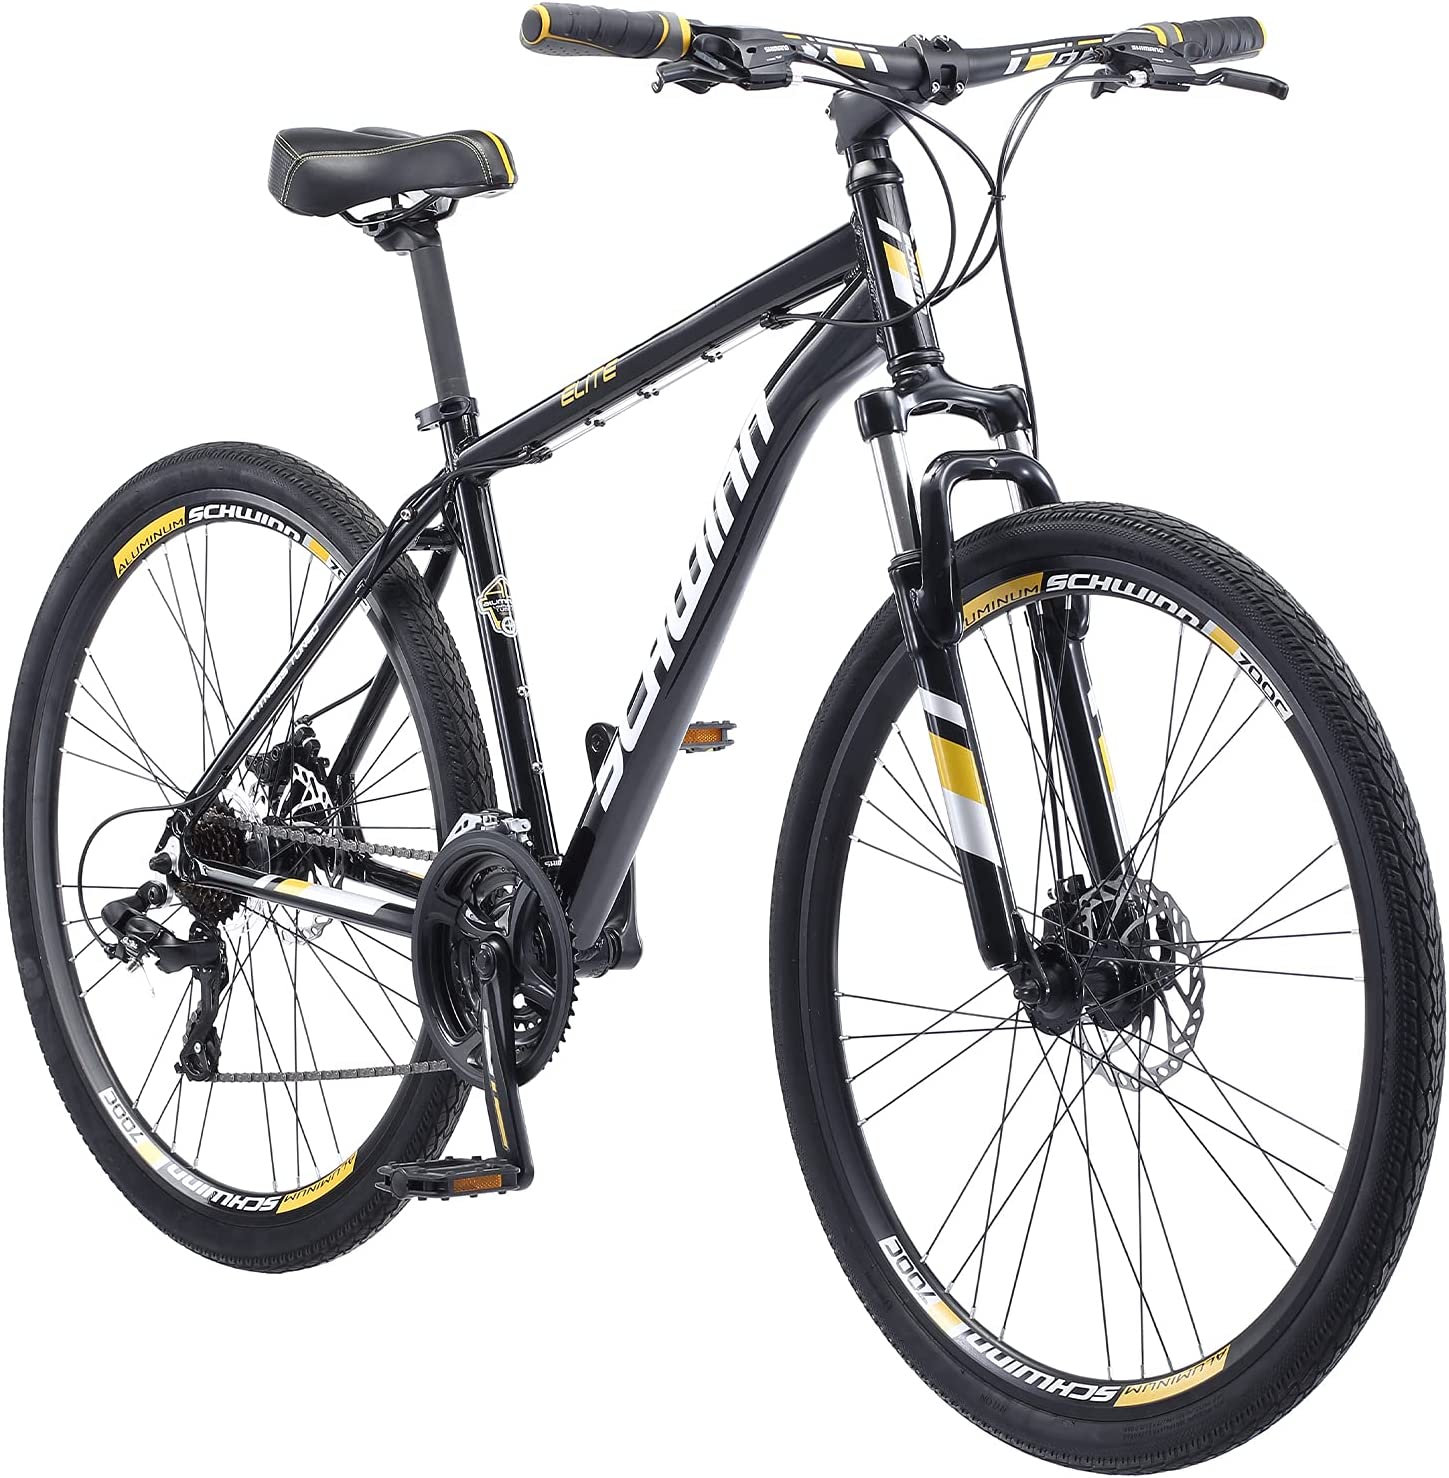 Schwinn GTX Comfort Adult Hybrid Bike, Dual Sport Bicycle, Lightweight Aluminum Frame